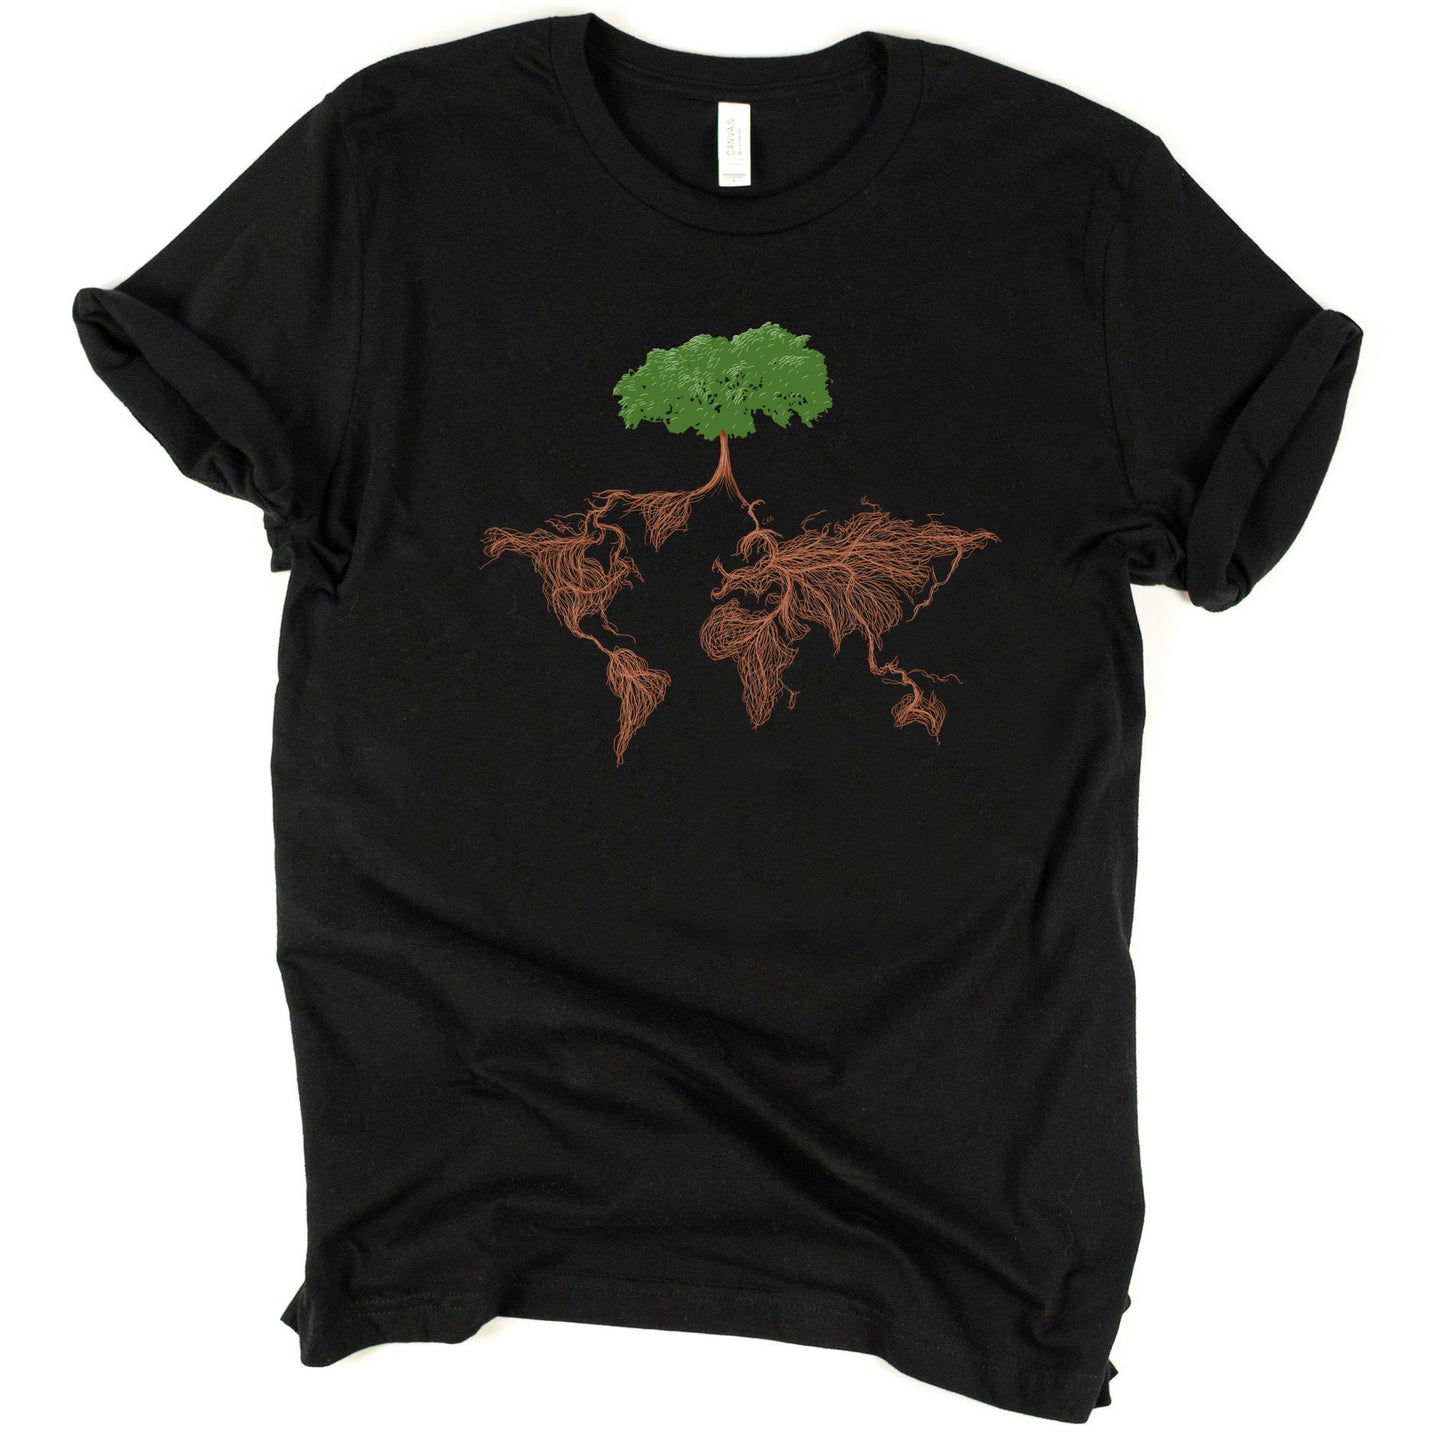 Climate Change Shirt